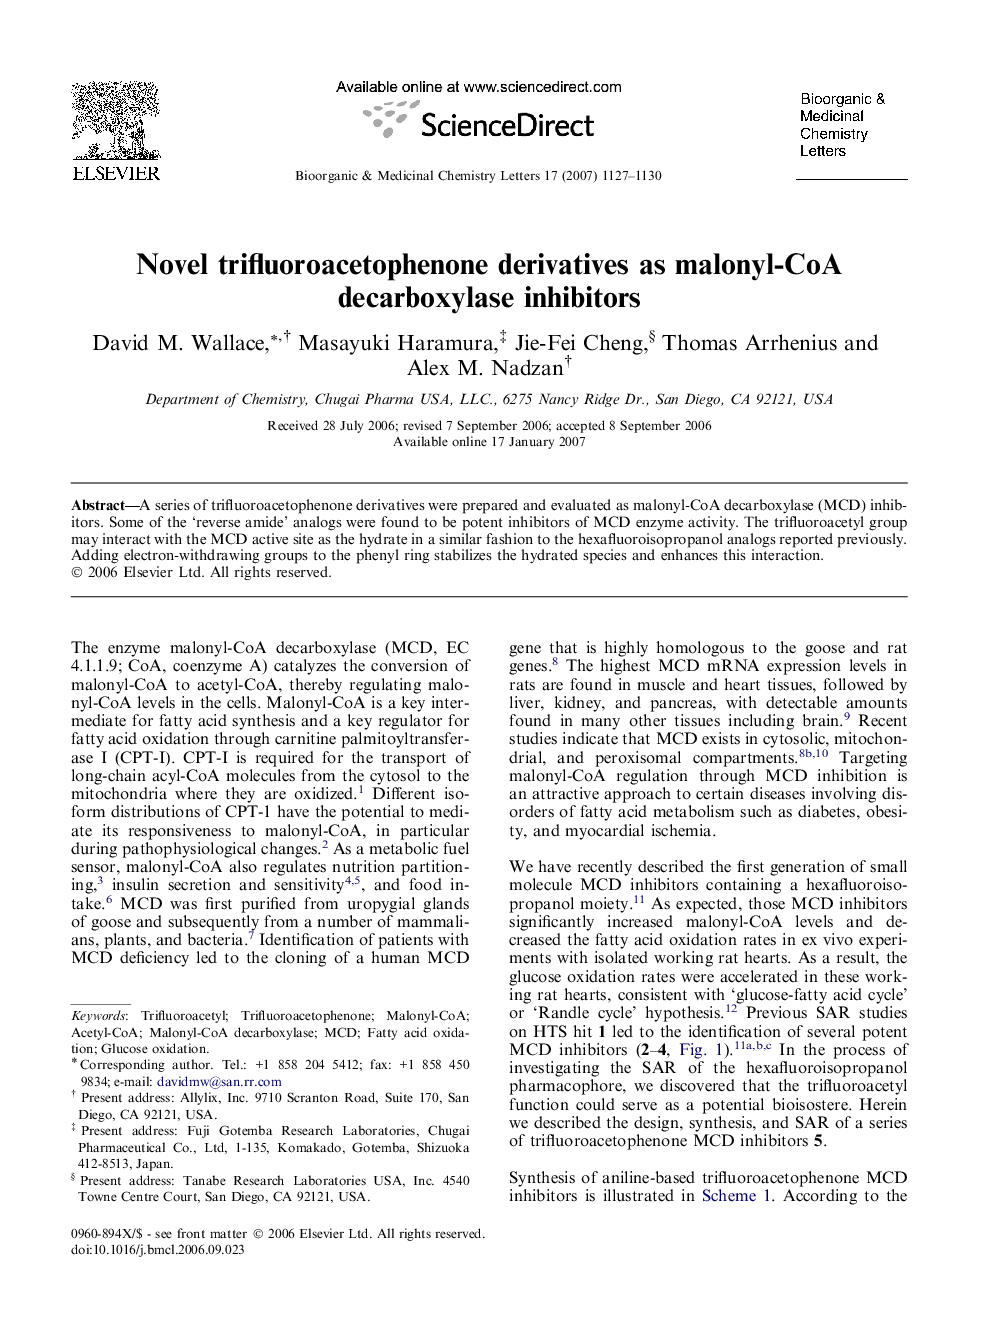 Novel trifluoroacetophenone derivatives as malonyl-CoA decarboxylase inhibitors